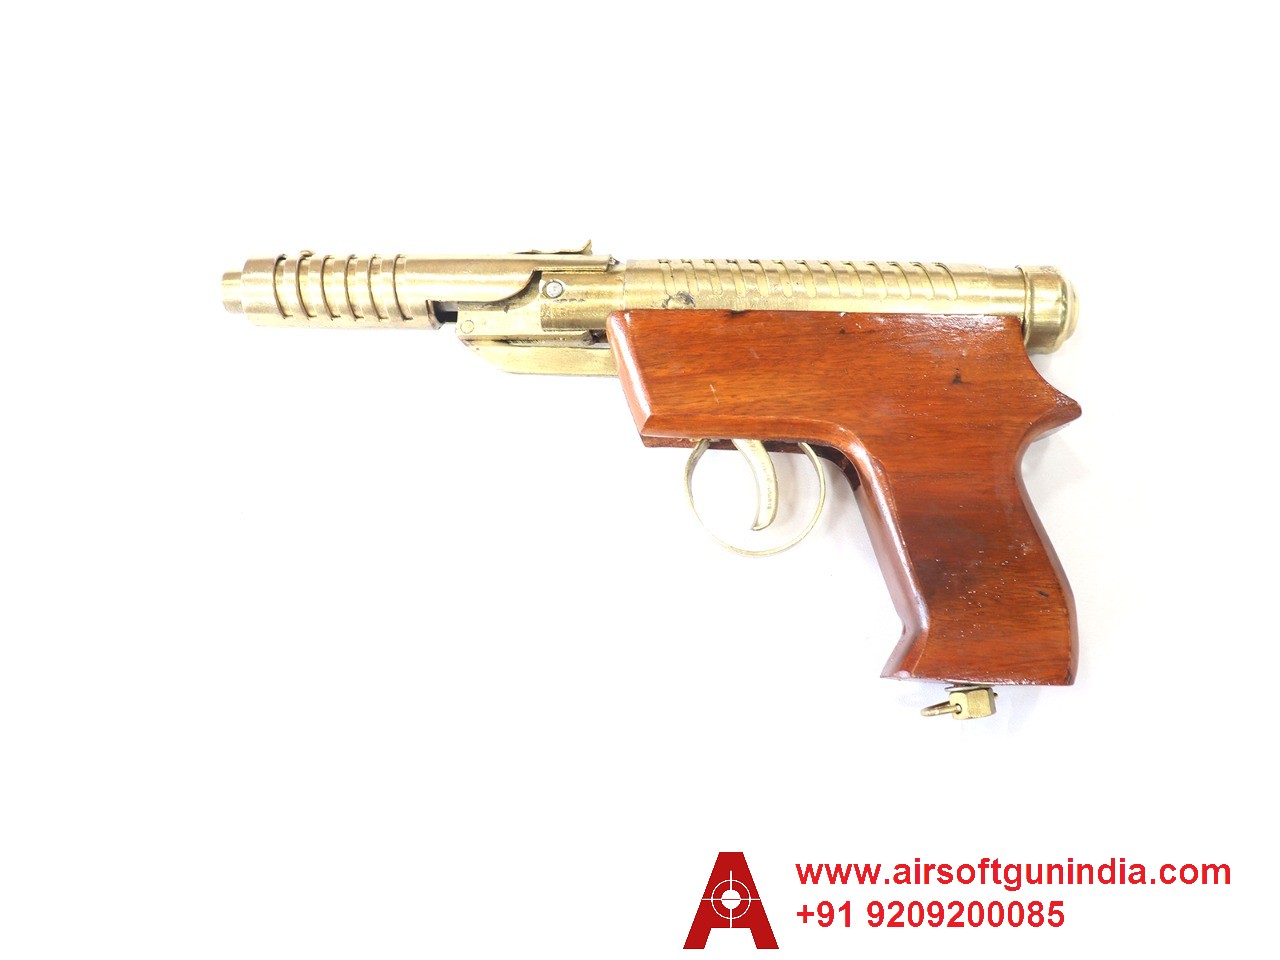 Eagle Master Mark 1 Gold Single-Shot .177Caliber / 4.5Mm Indian Air Pistol By AirsoftGunIndia